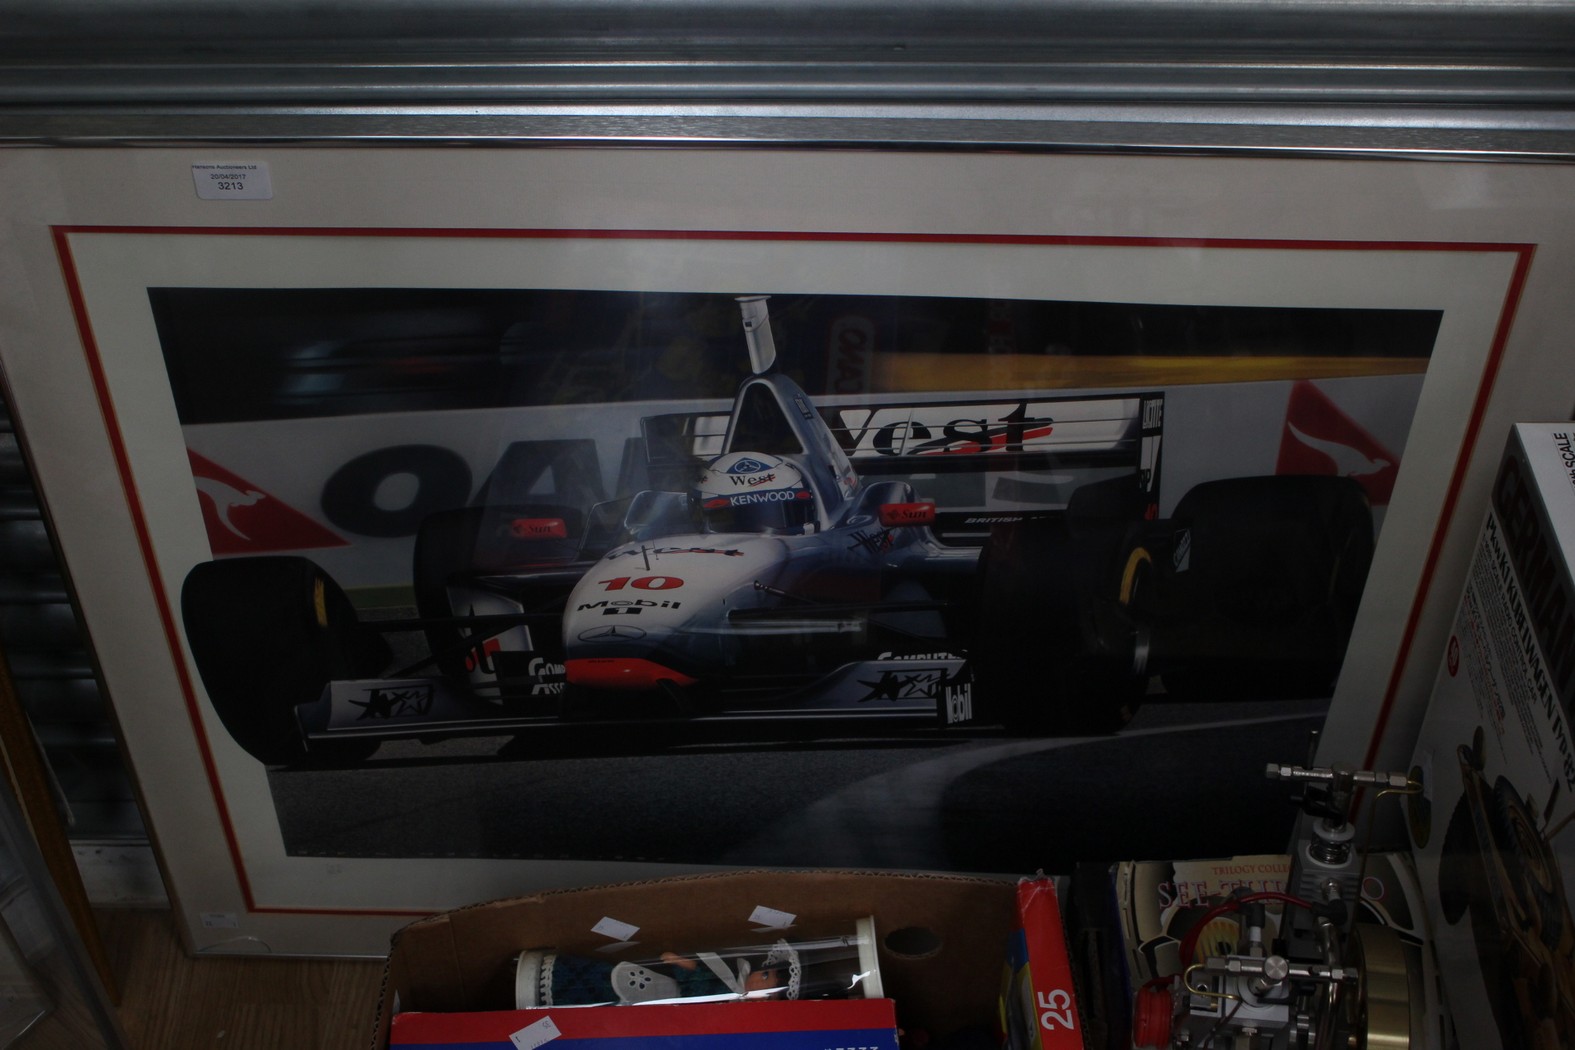 A Gavin McLeod Limited Edition print, "Melbourne McLaren, David Coulthard at Melbourne 1997,